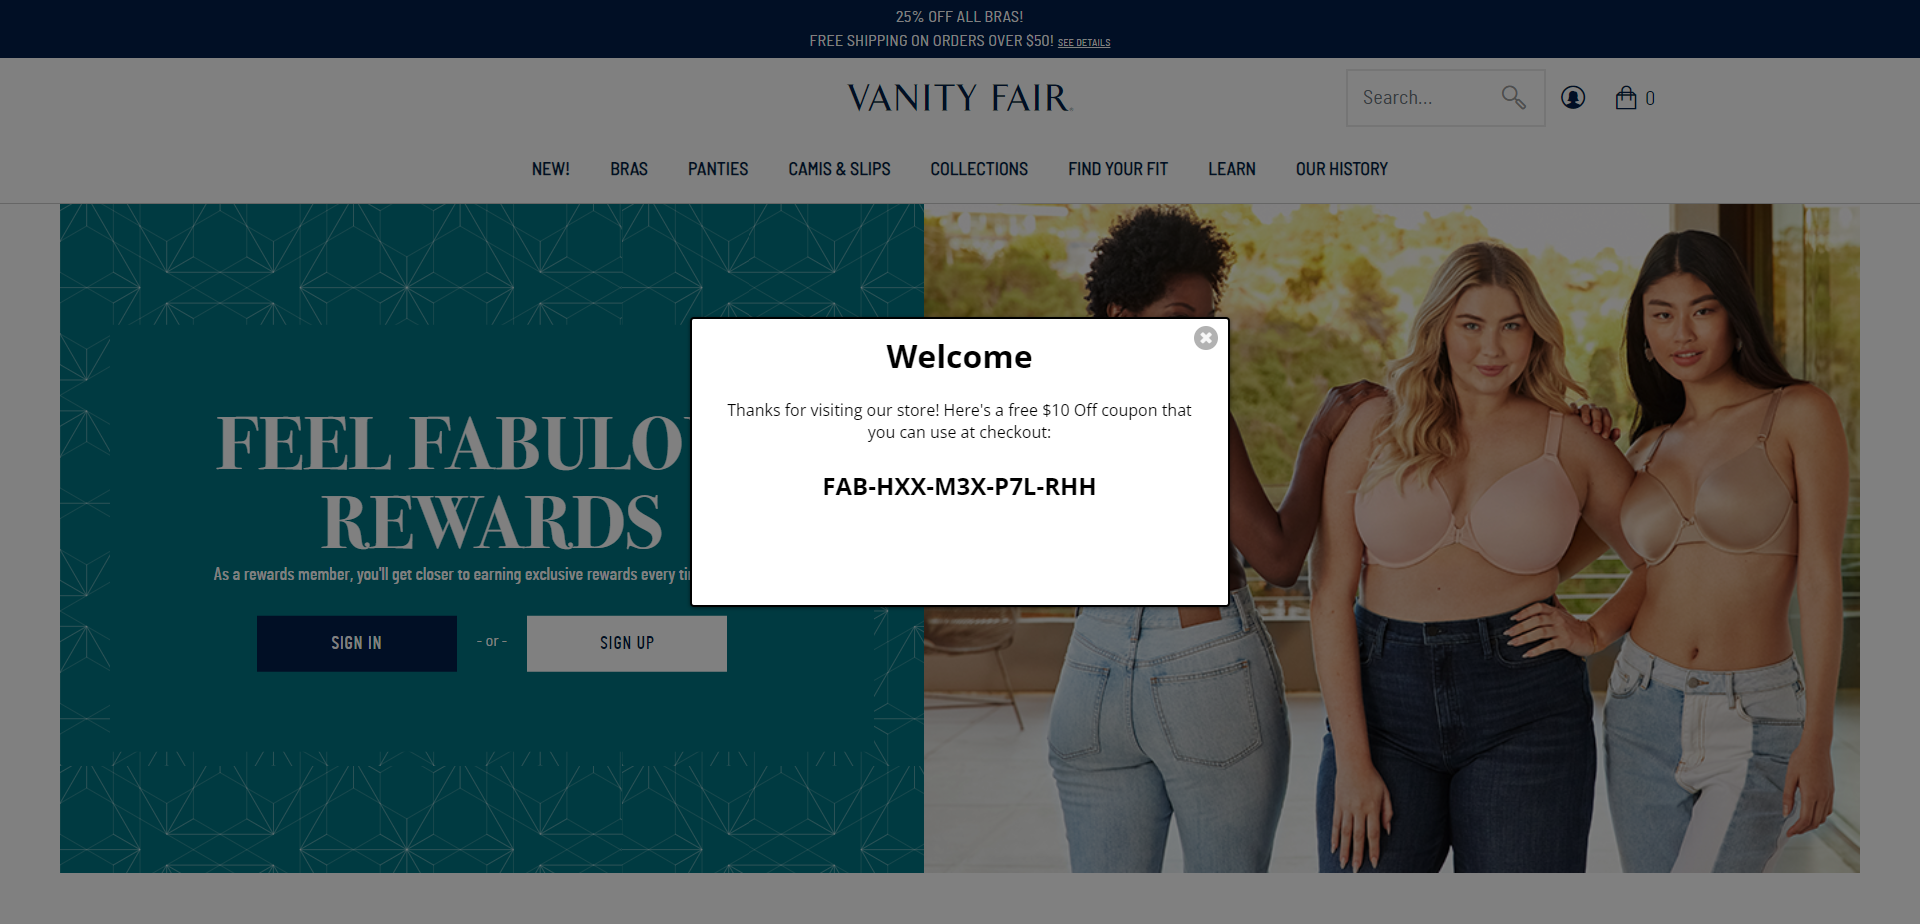 Landing Page for Vanity Fair Lingerie